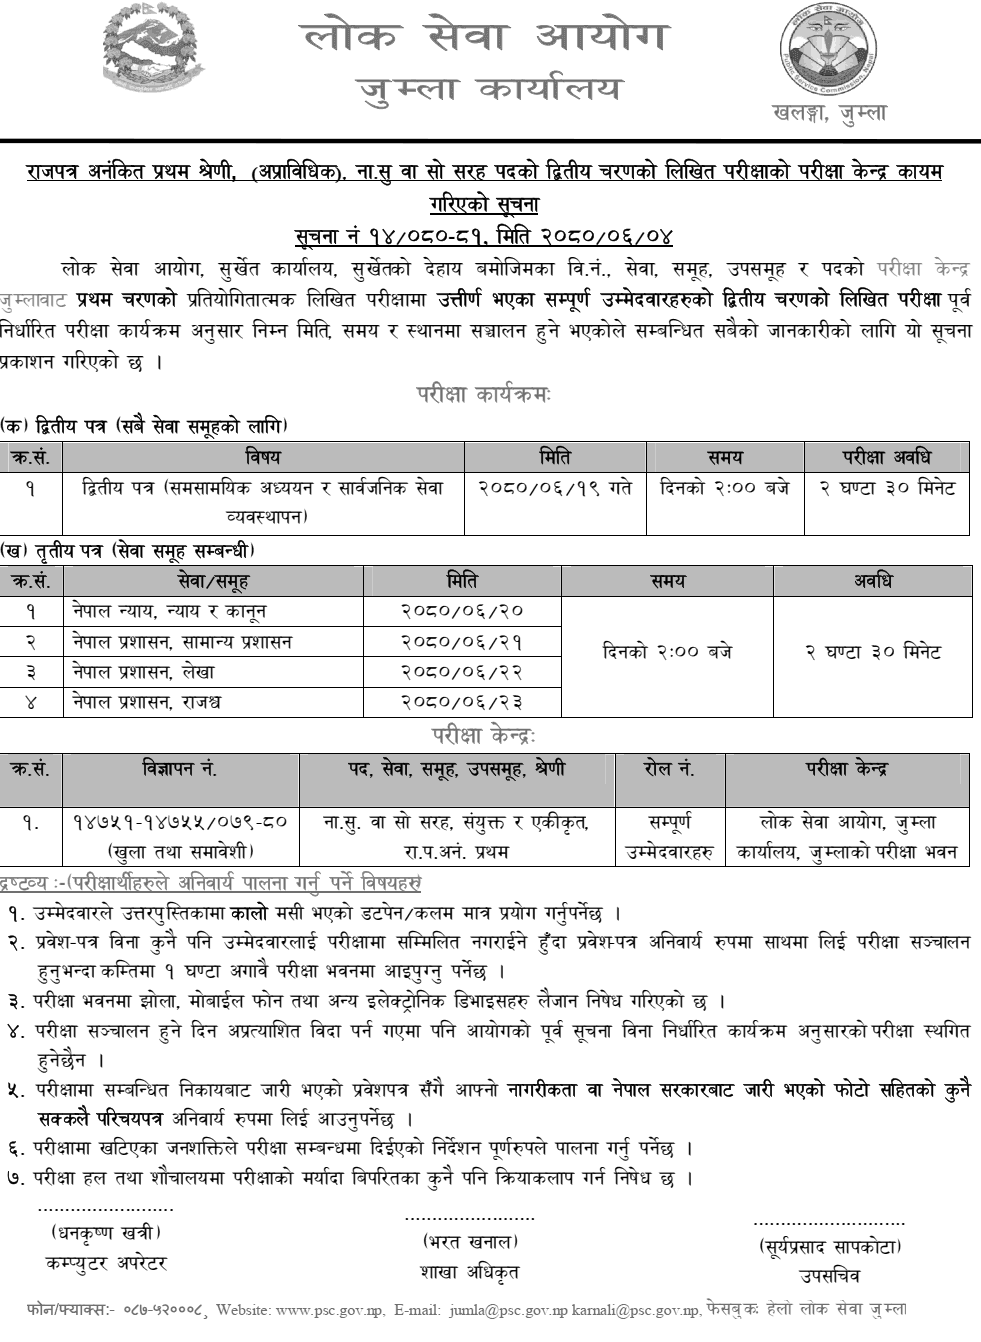 Lok Sewa Aayog Jumla 2nd Phase Written Exam Center of Nayab Subba 2080